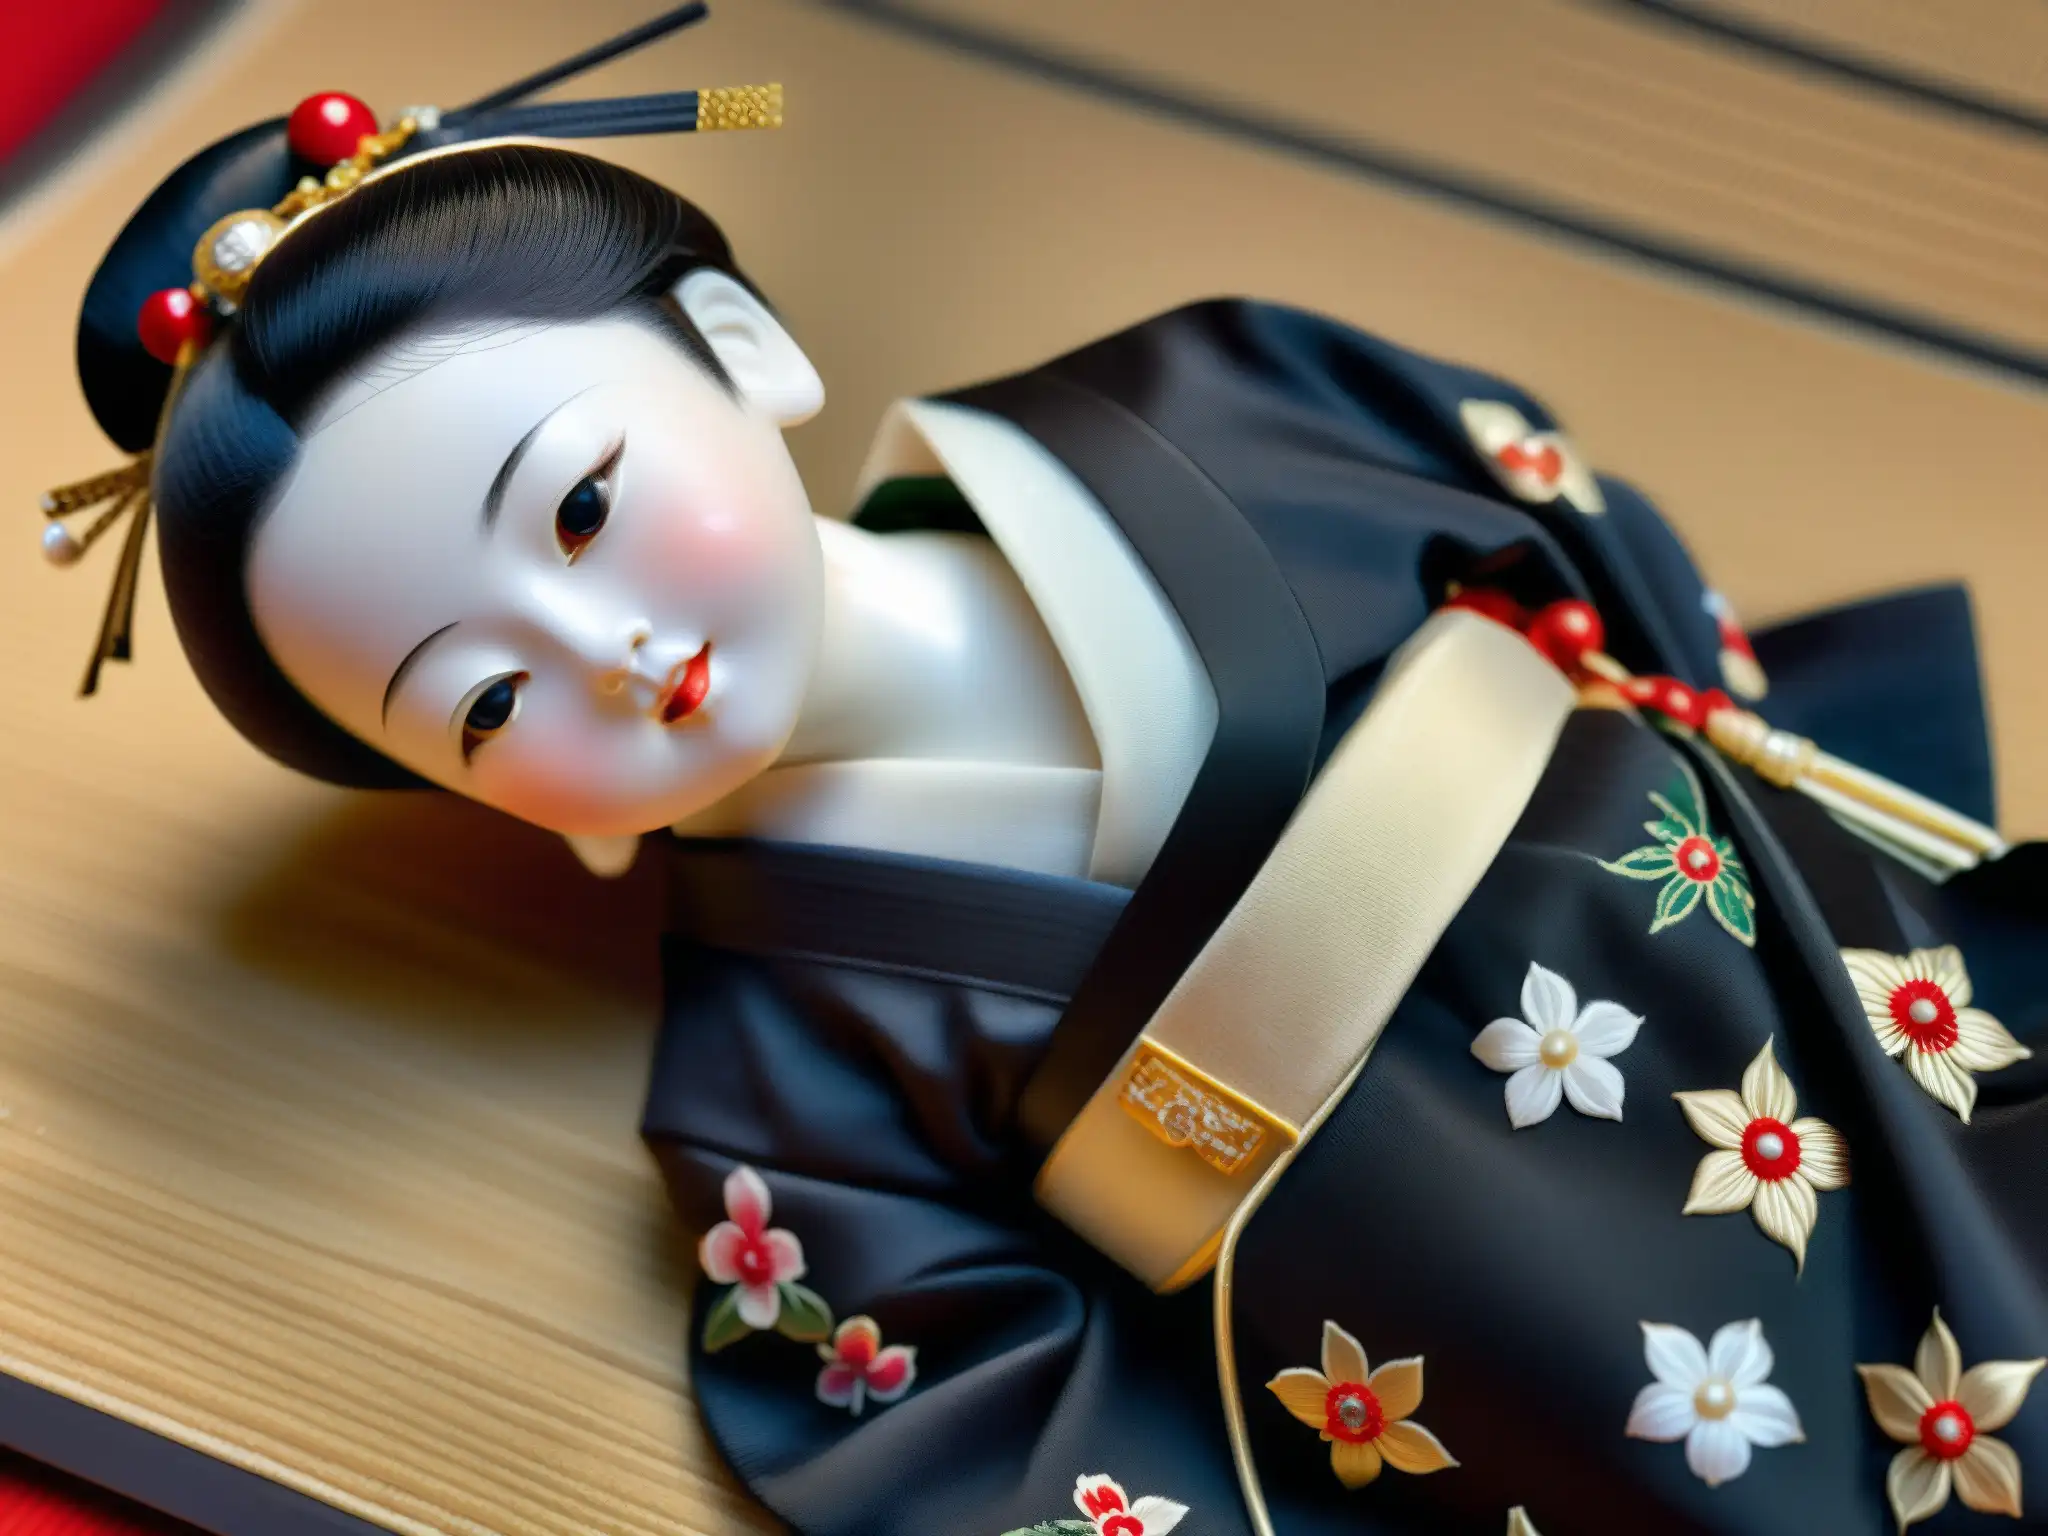 Una antigua muñeca japonesa 'Okiku' reposa en un tatami, vestida con un kimono negro